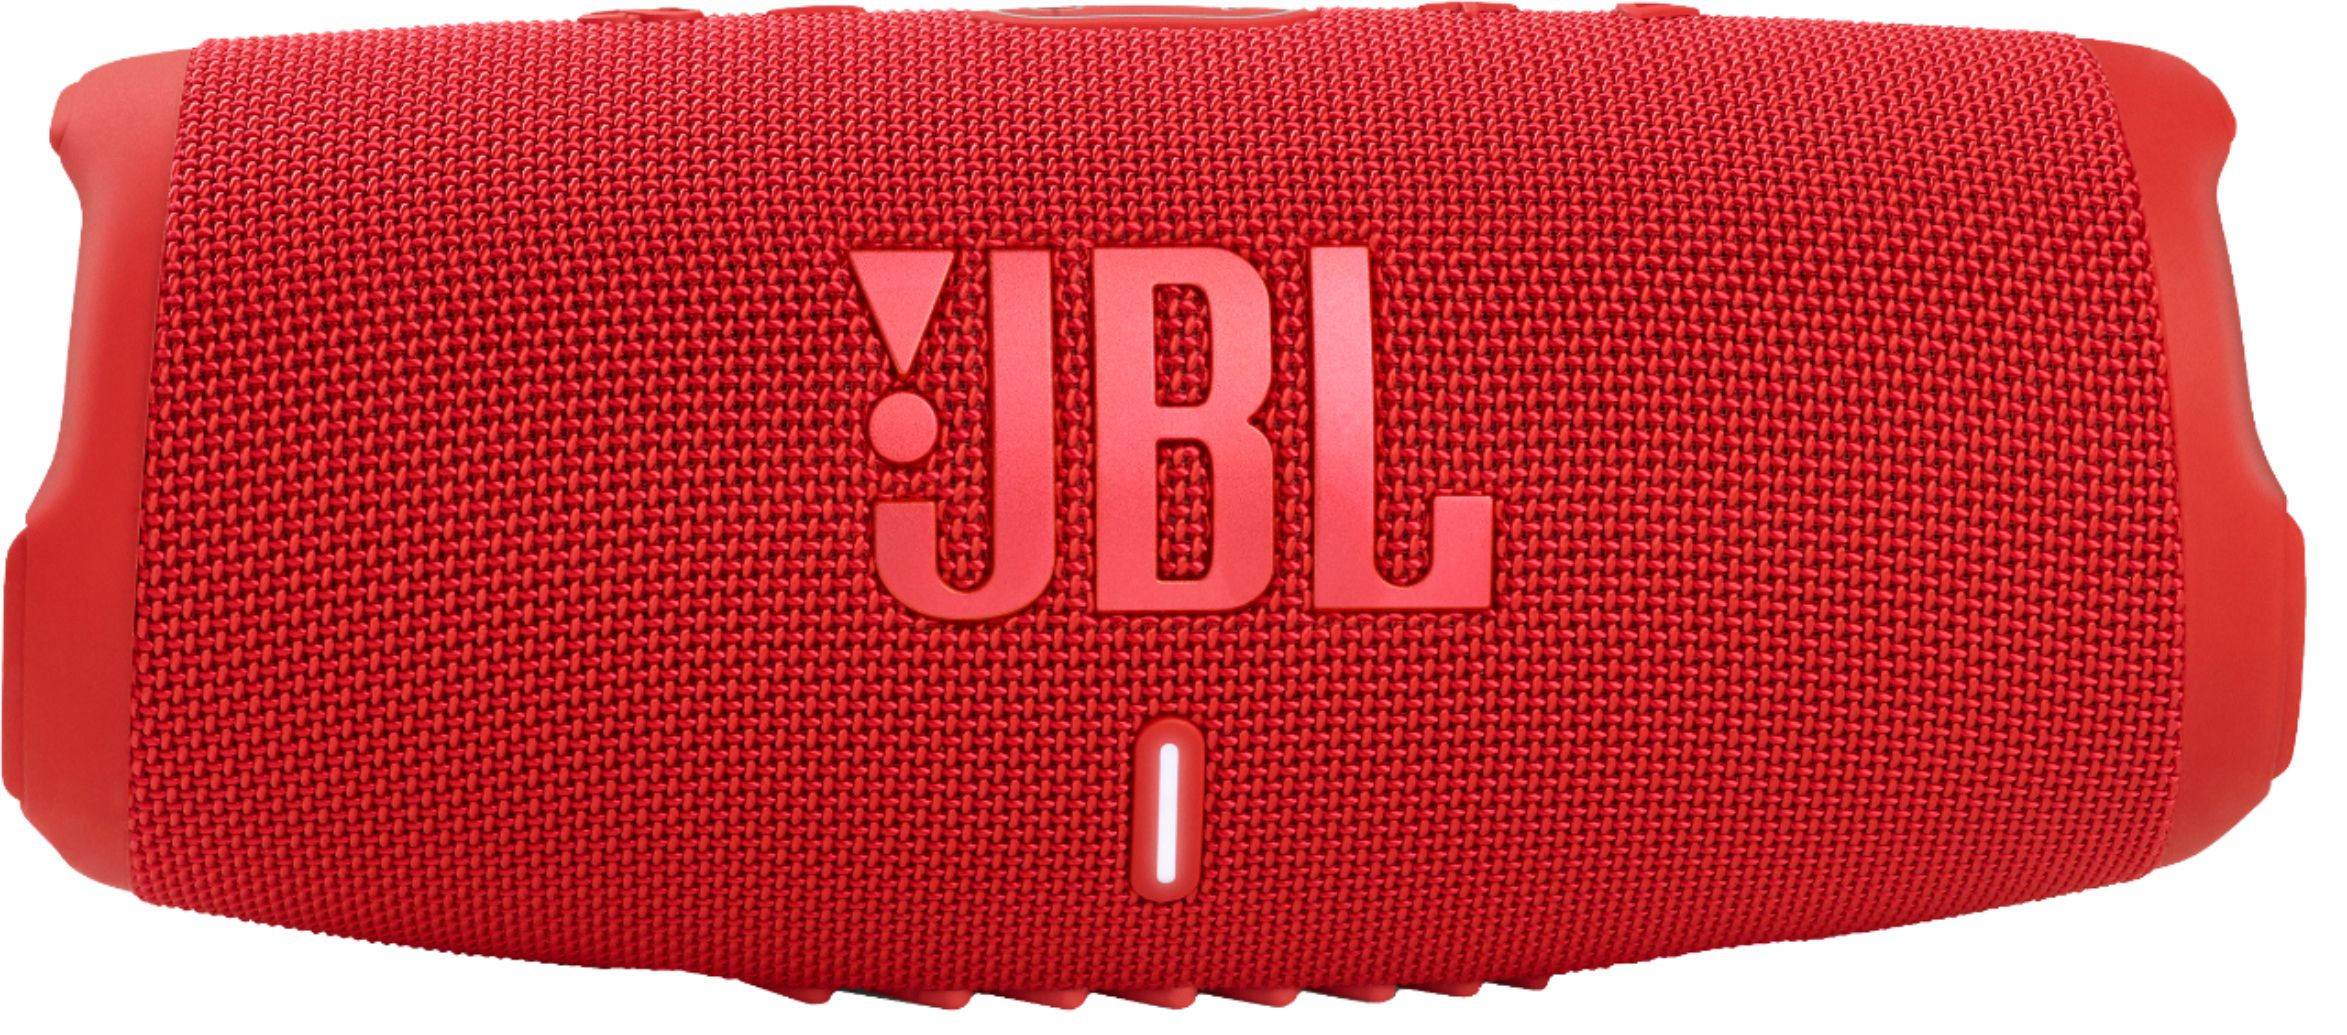 JBL Charge 5 Portable Waterproof Bluetooth Speaker with Powerbank - Pair  (Black/Camo) 